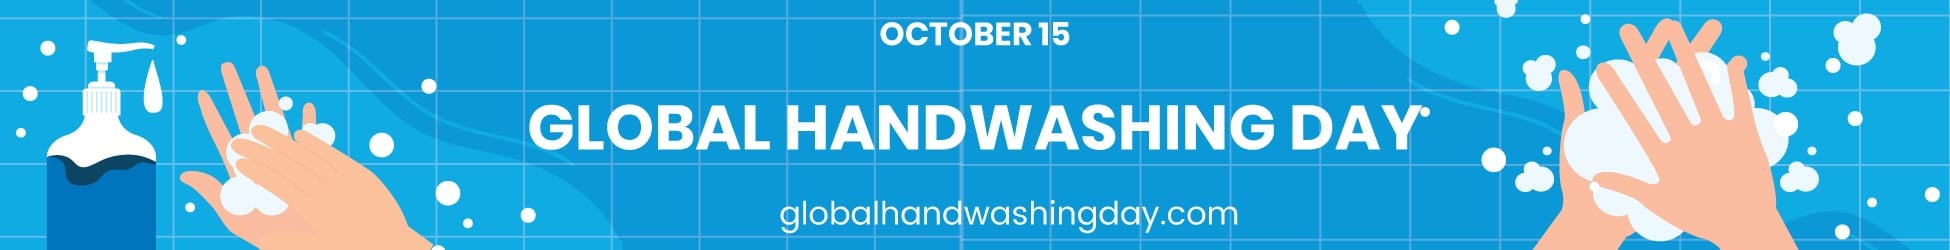 Global Handwashing Day Website Banner